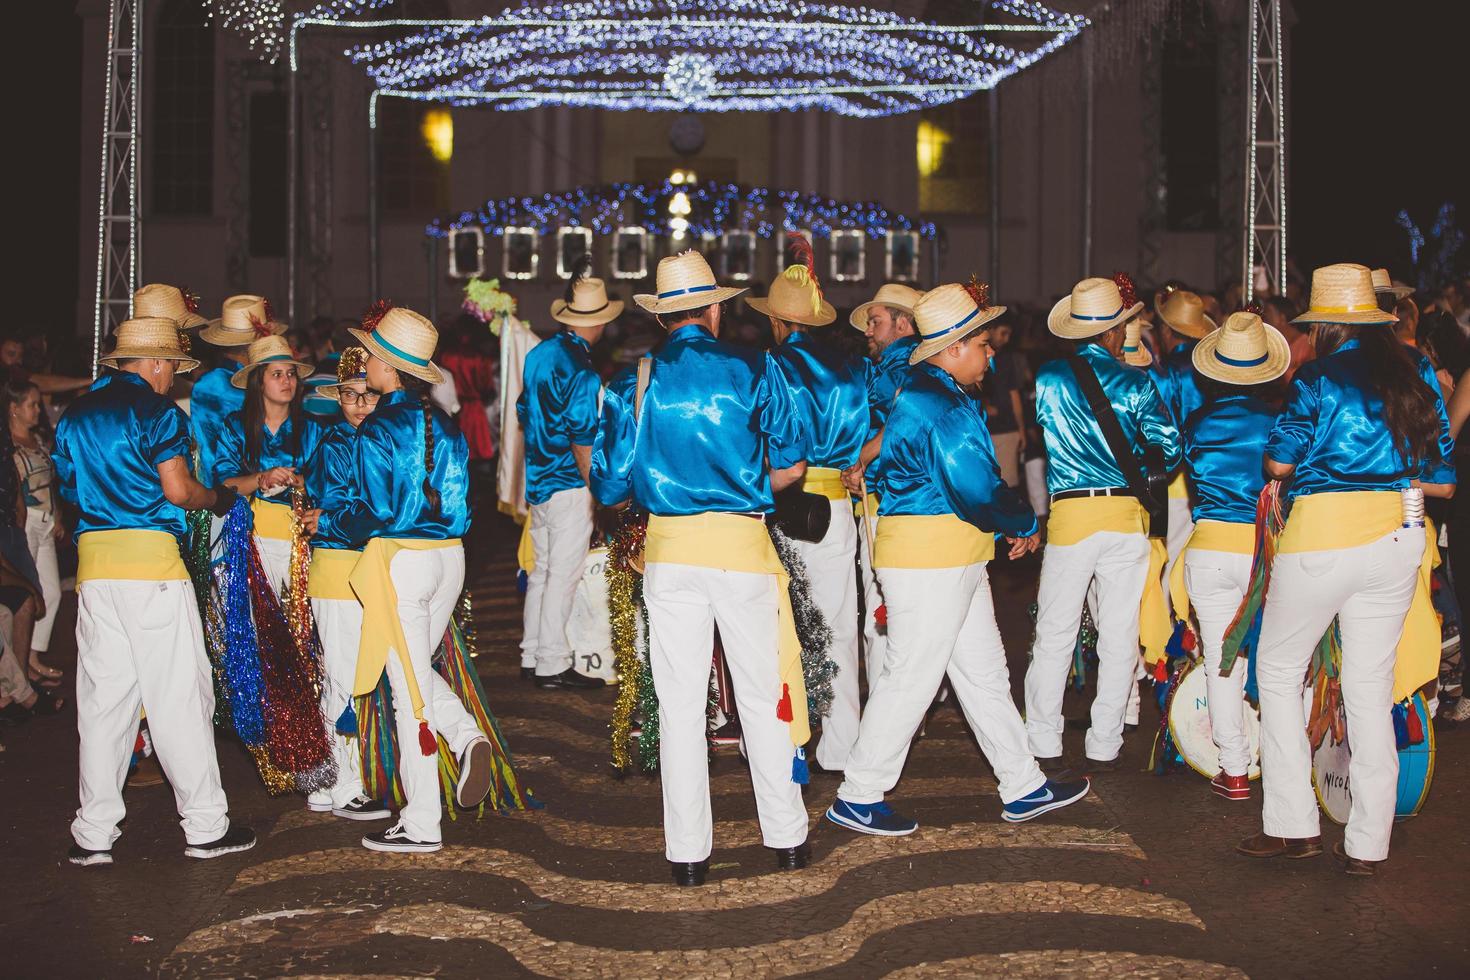 minas gerais, brazilië, dec 2019 - traditionele dansvoorstelling genaamd festa do congo foto